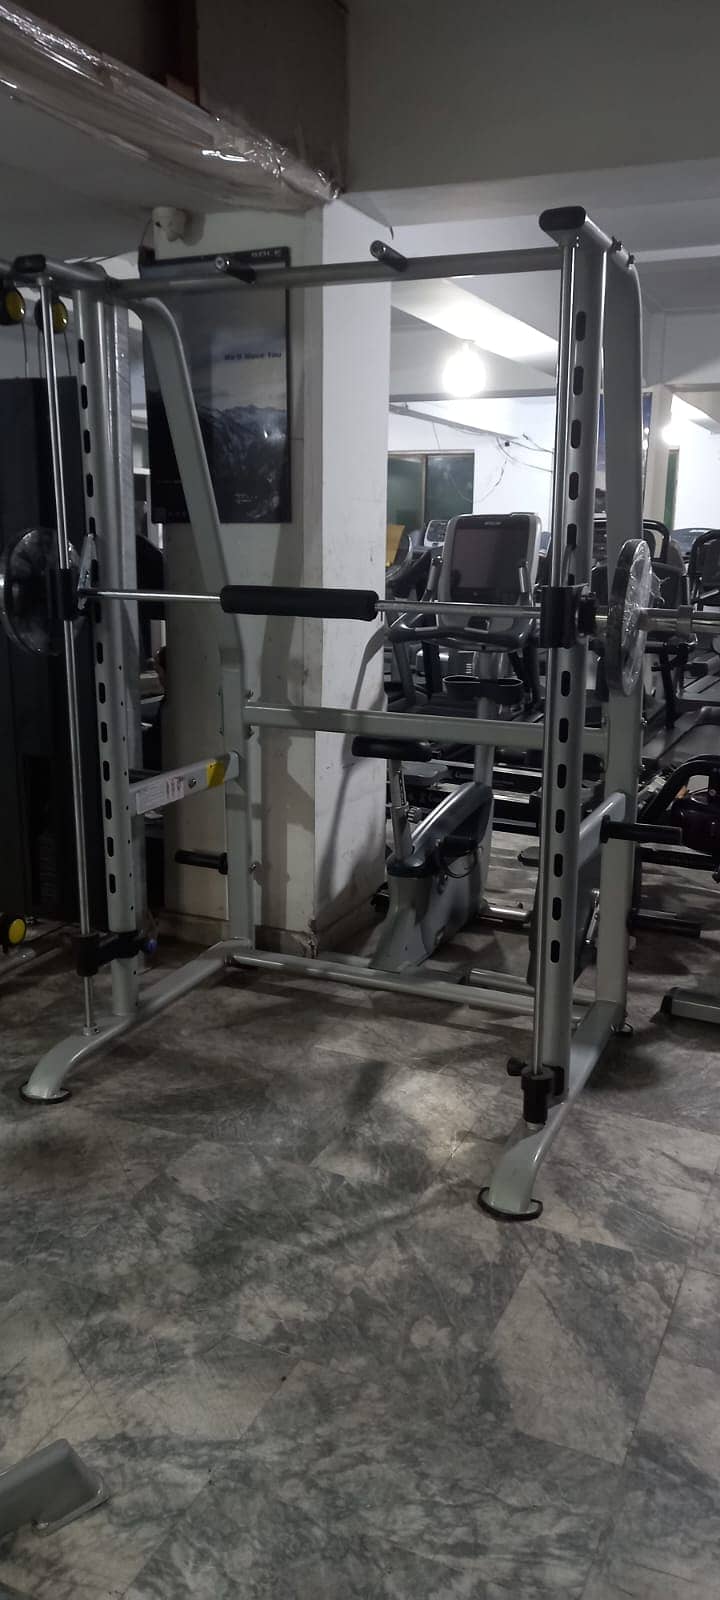 Power Rack Smith Trainer functional gym setup dumbbell treadmill plate 3